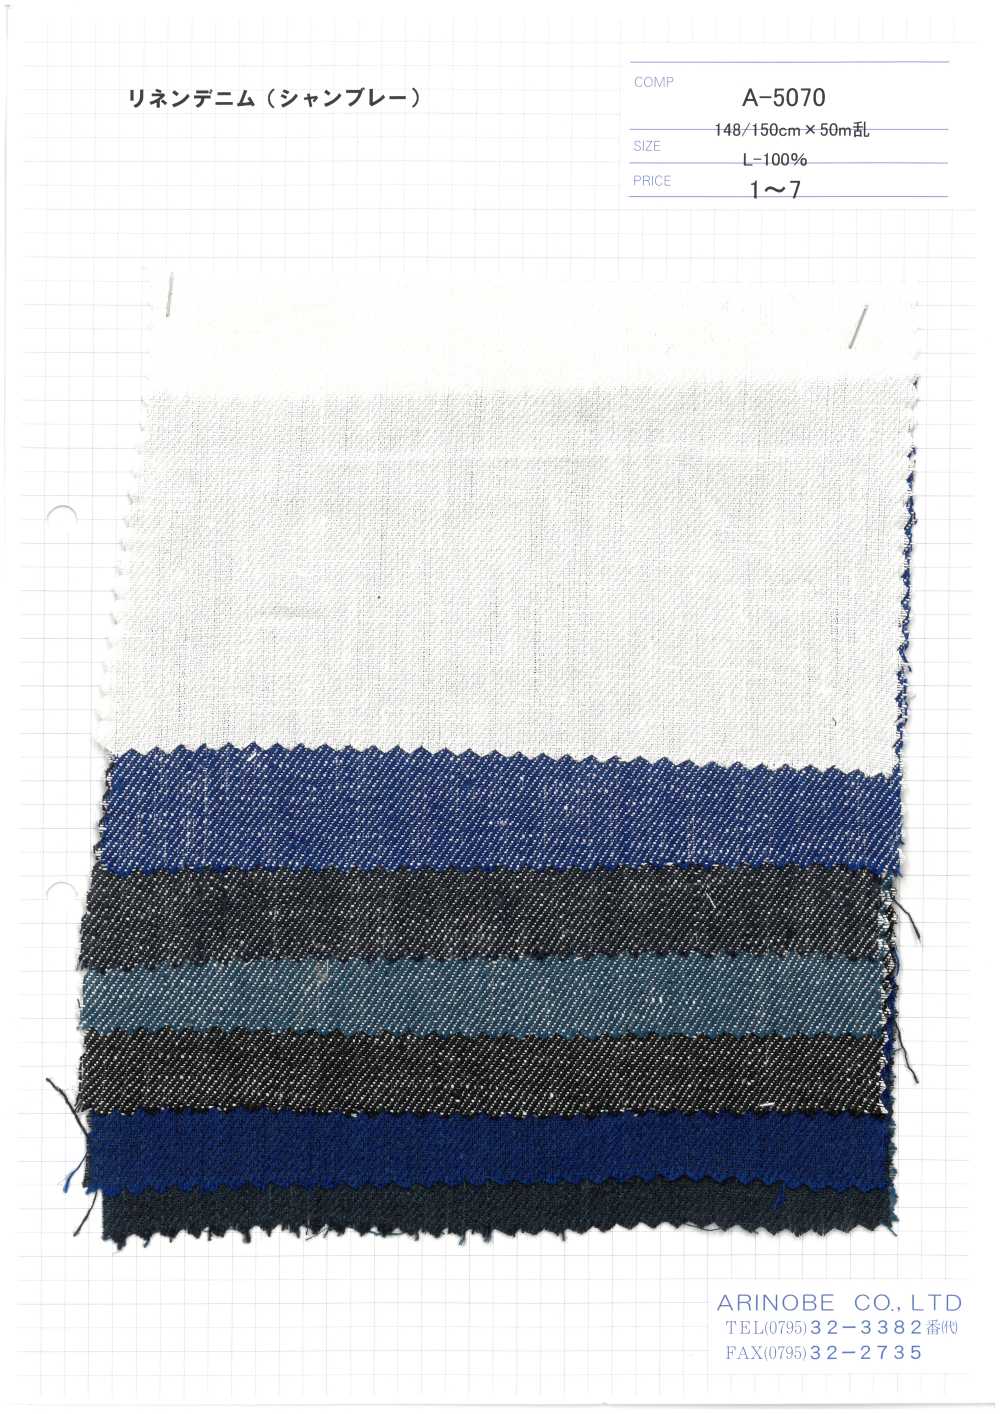 A-5070 Leinen Denim (Chambray)[Textilgewebe] ARINOBE CO., LTD.